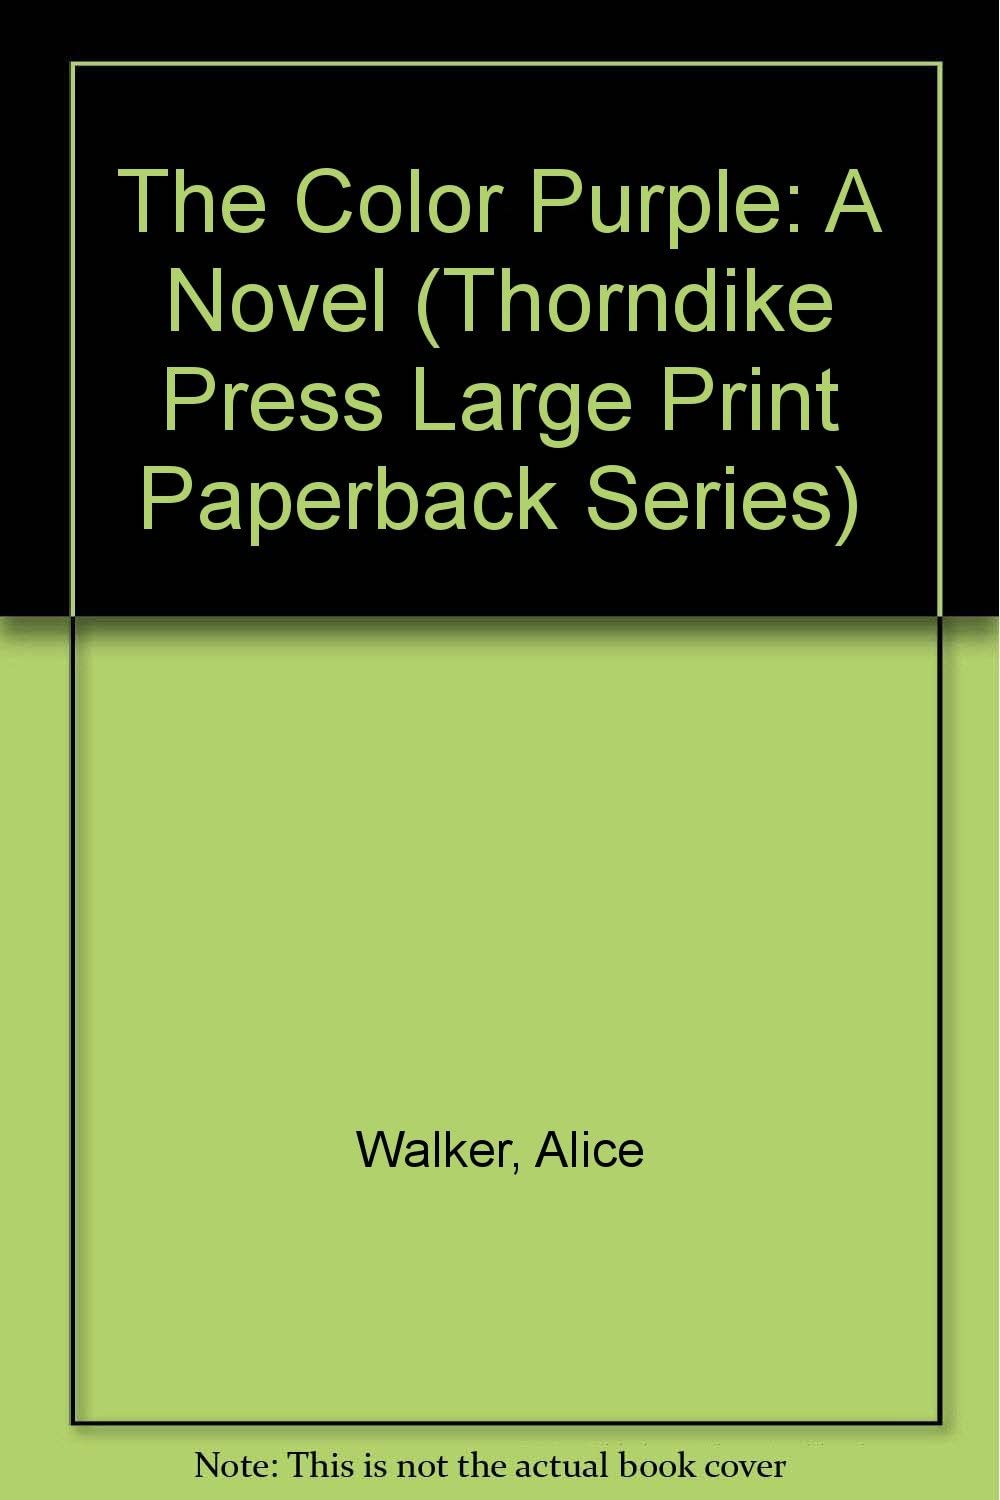 The Color Purple: A Novel (G.K. Hall Large Print Book Series)